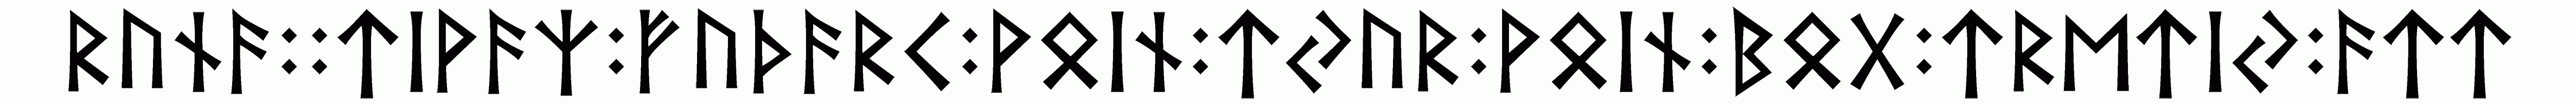 runa+17+tiwaz+futhark+voin+tyur+voin+bog+tretiy+att - Напиши имя  РУНА+17+TIWAZ+FUTHARK+ВОИН+ТЮР+ВОИН+БОГ+ТРЕТИЙ+АТТ рунами  - ᚱᚢᚾᚨ::ᛏᛁᚹᚨᛉ:ᚠᚢᛏᚺᚨᚱᚲ:ᚹᛟᛁᚾ:ᛏᛃᚢᚱ:ᚹᛟᛁᚾ:ᛒᛟᚷ:ᛏᚱᛖᛏᛁᛃ:ᚨᛏᛏ - Значение и характер имени  РУНА+17+TIWAZ+FUTHARK+ВОИН+ТЮР+ВОИН+БОГ+ТРЕТИЙ+АТТ - 